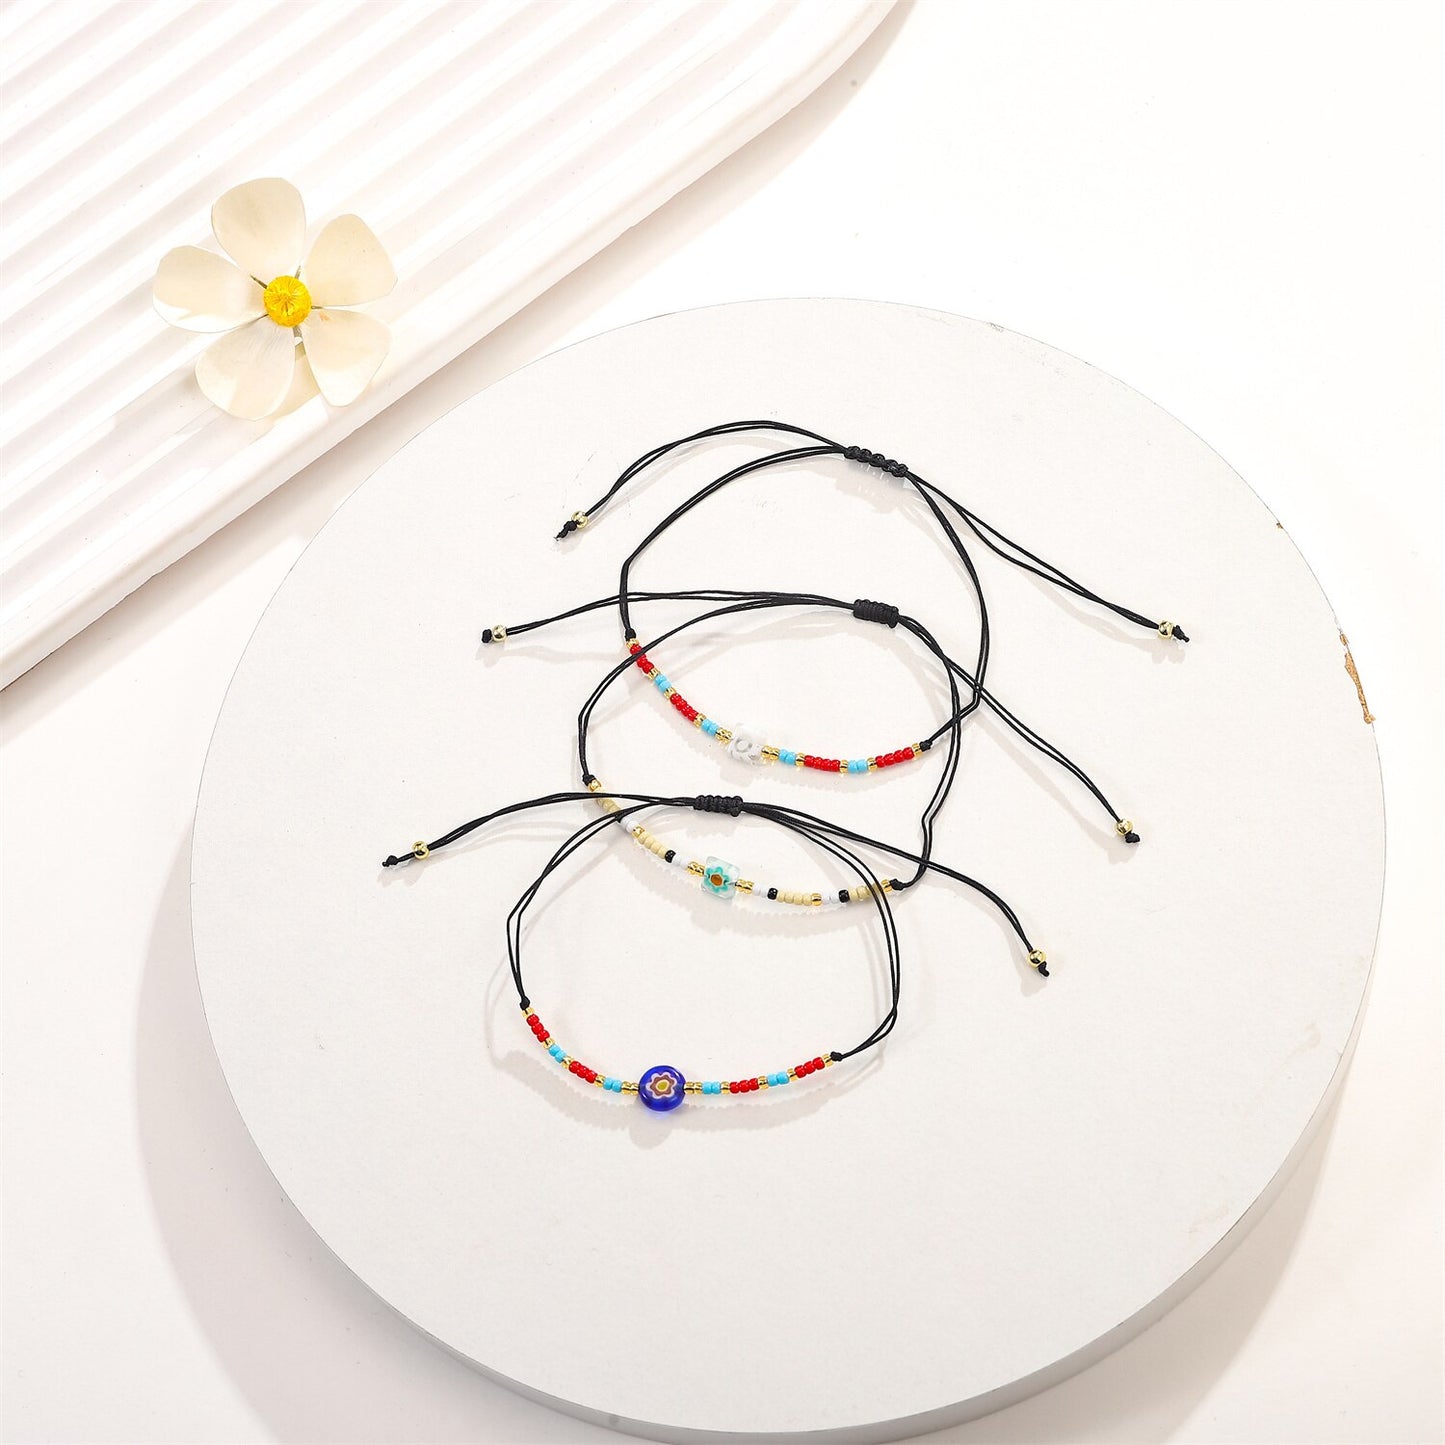 12pcs/lot Cute Flowers Bracelet Crystal Seed Bead Couple Braided Adjustable Rope Chain Bracelets for Women Friendship Jewelry